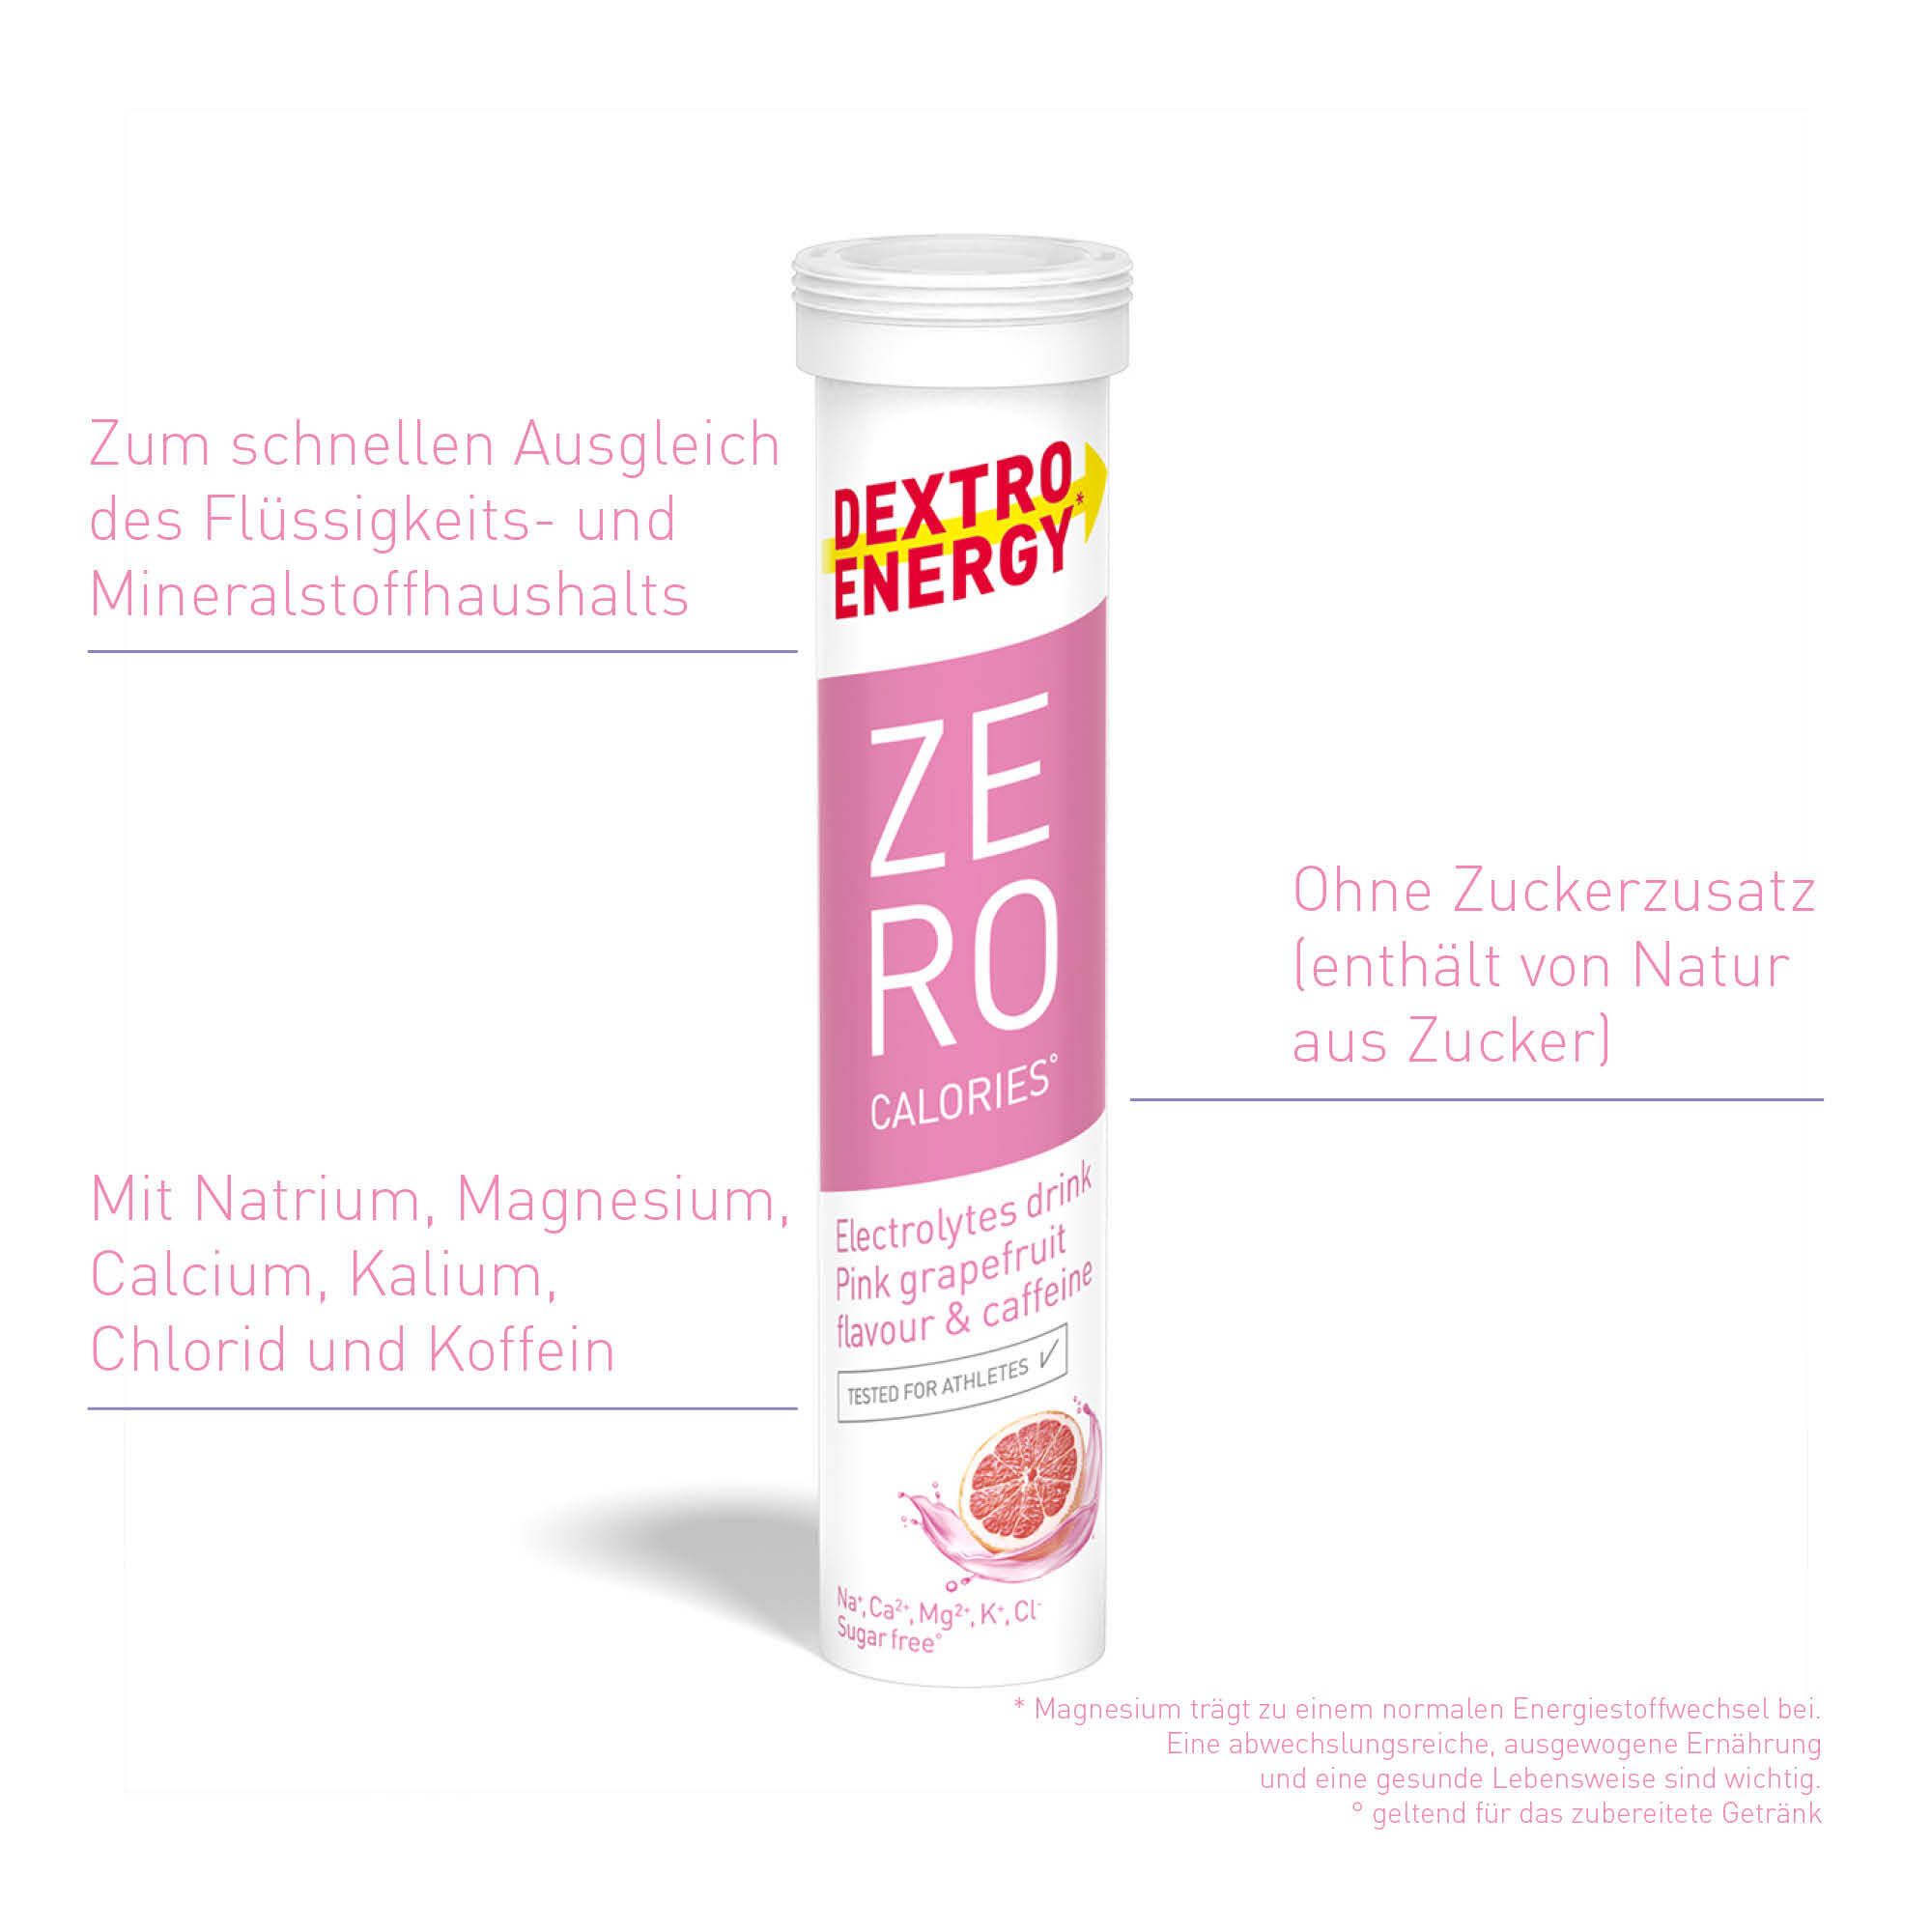 Dextro Energy Zero Calories® Pink Grapefruit + Caffeine